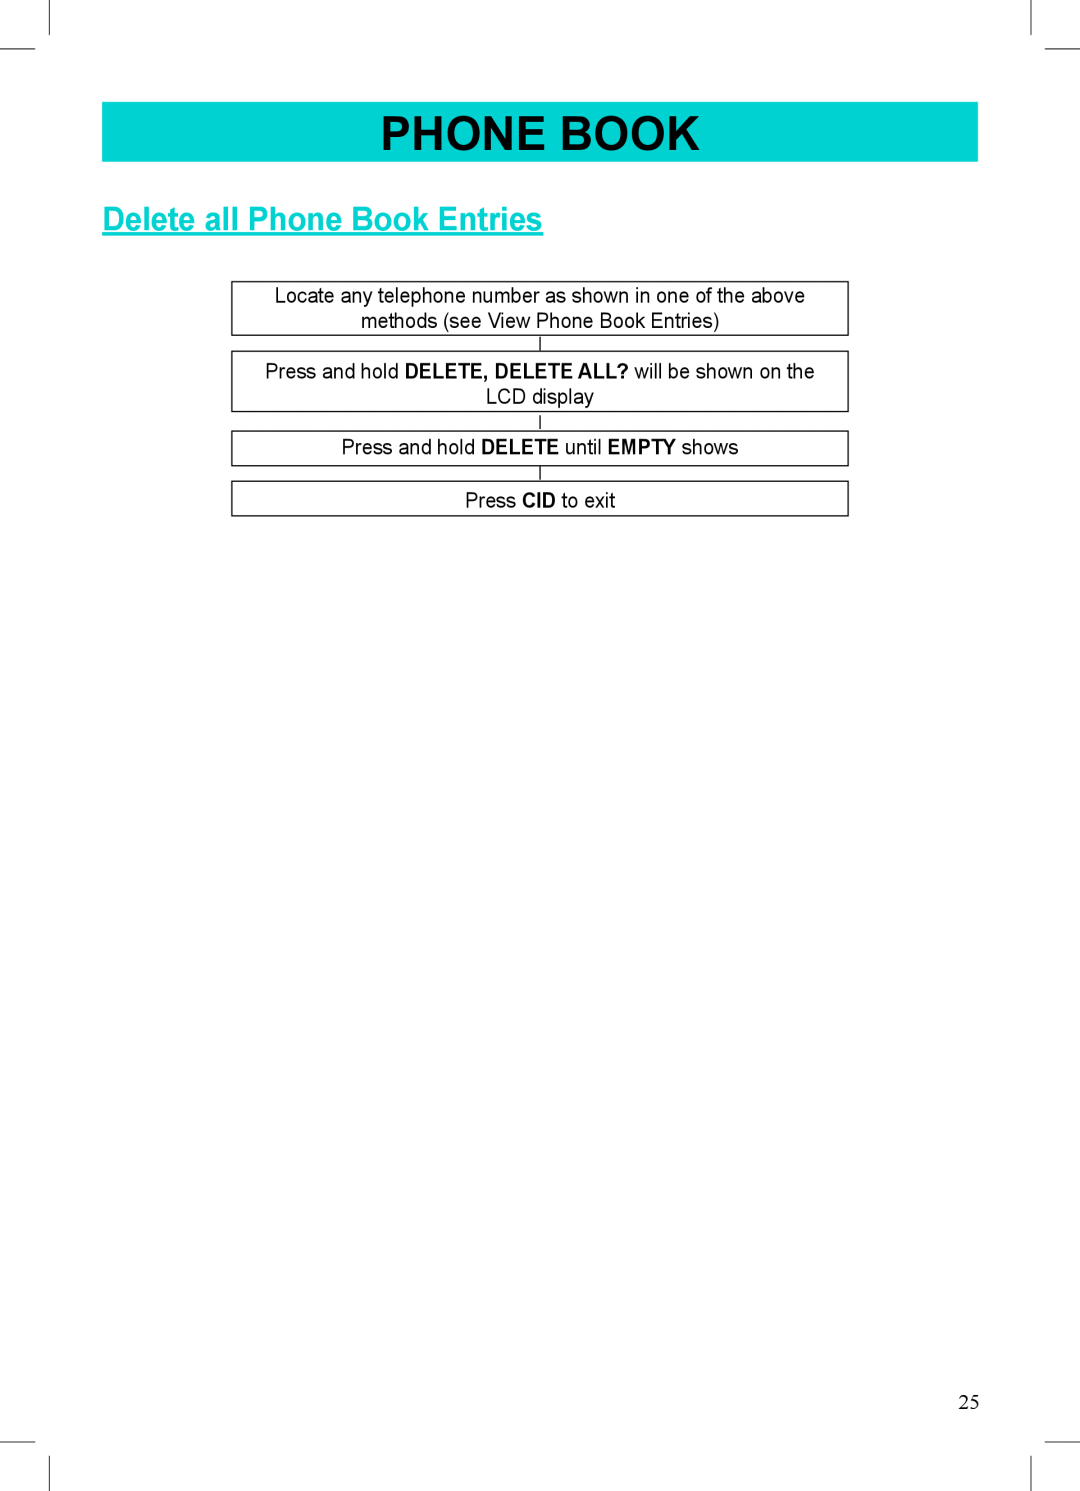 Geemarc AMPLIVOICE50 manual Delete all Phone Book Entries 